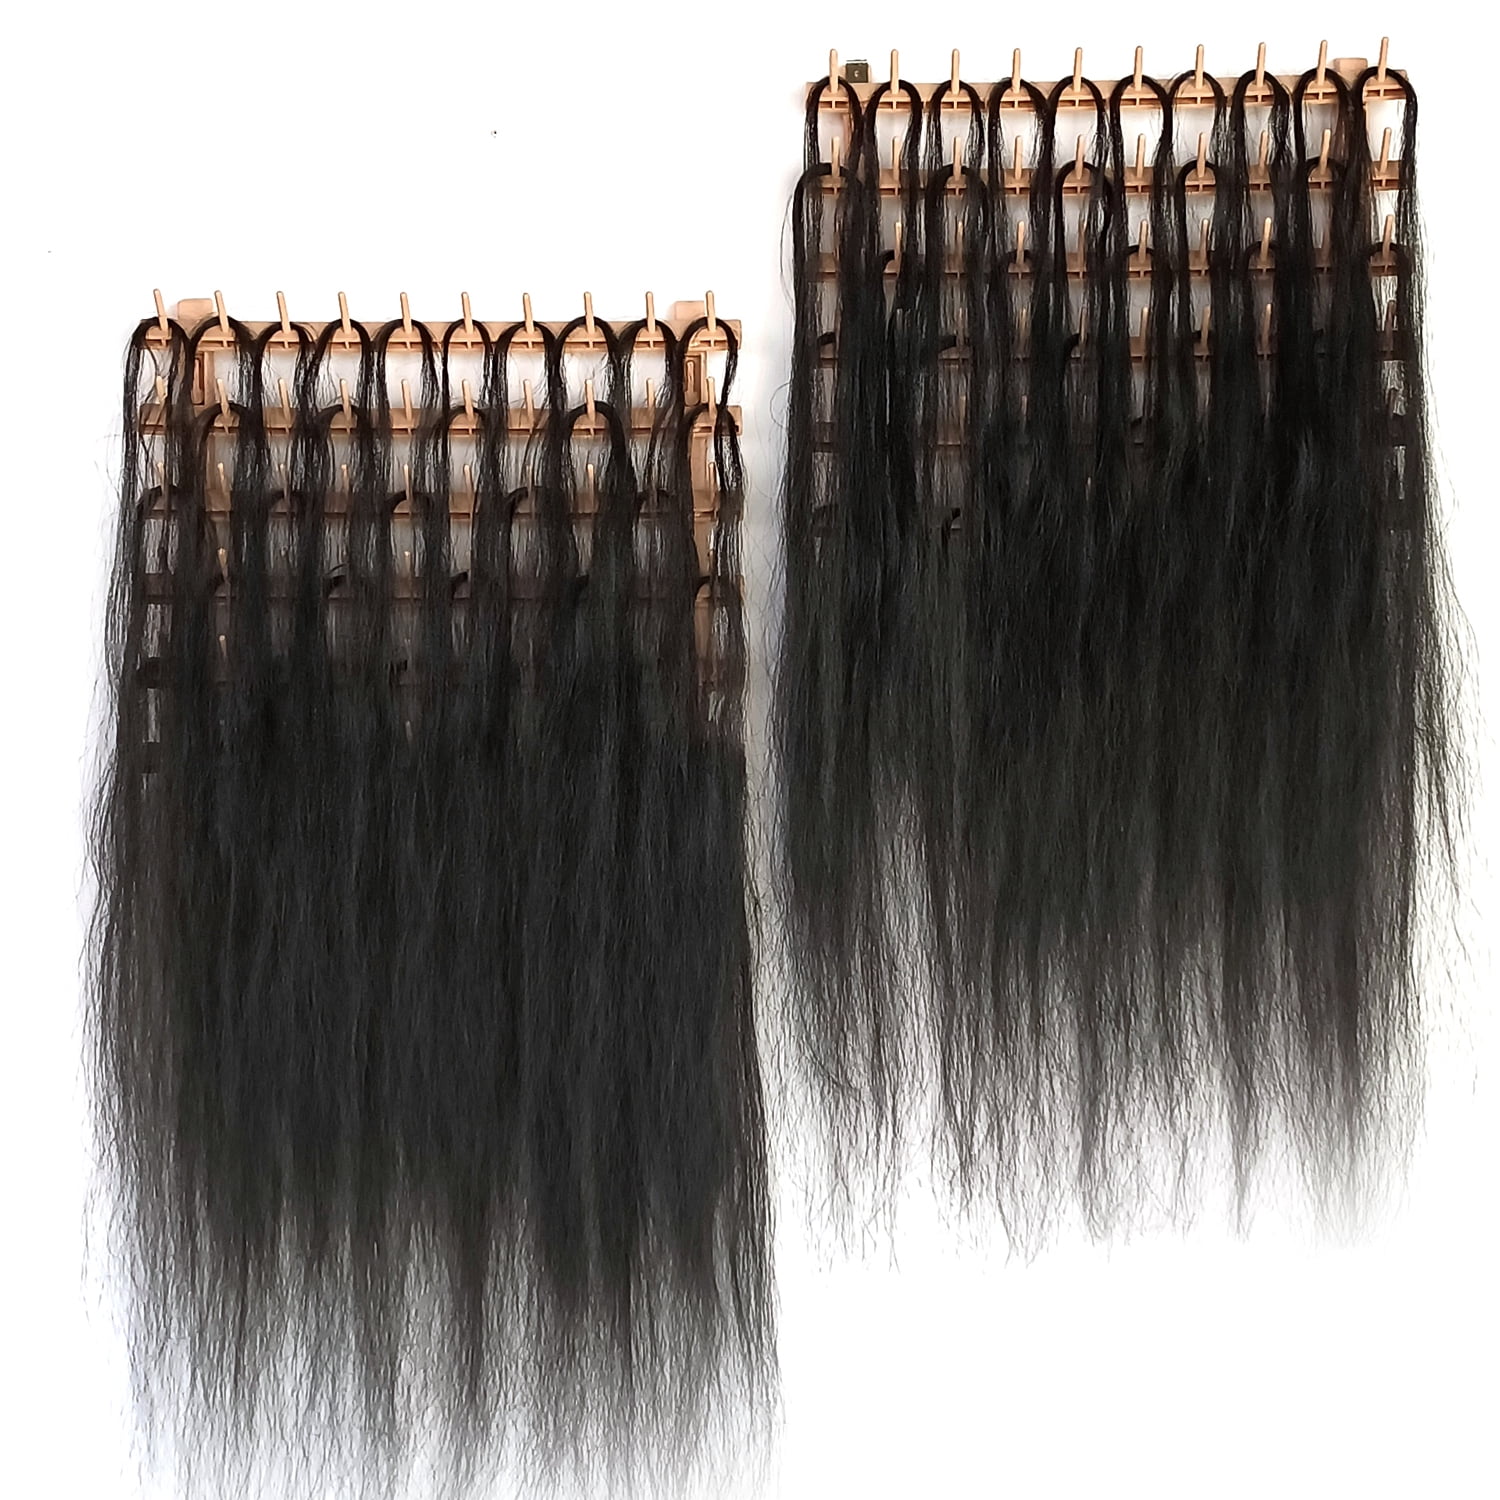 Braiding Hair Rack Braid Rack 120 Pegs Non-slip Hair Rack for Braiding Hair,  Double Sides Braid Hair Holder Stand with Hair Braiding Tools and Supplies  (120 Spool -wood color） 